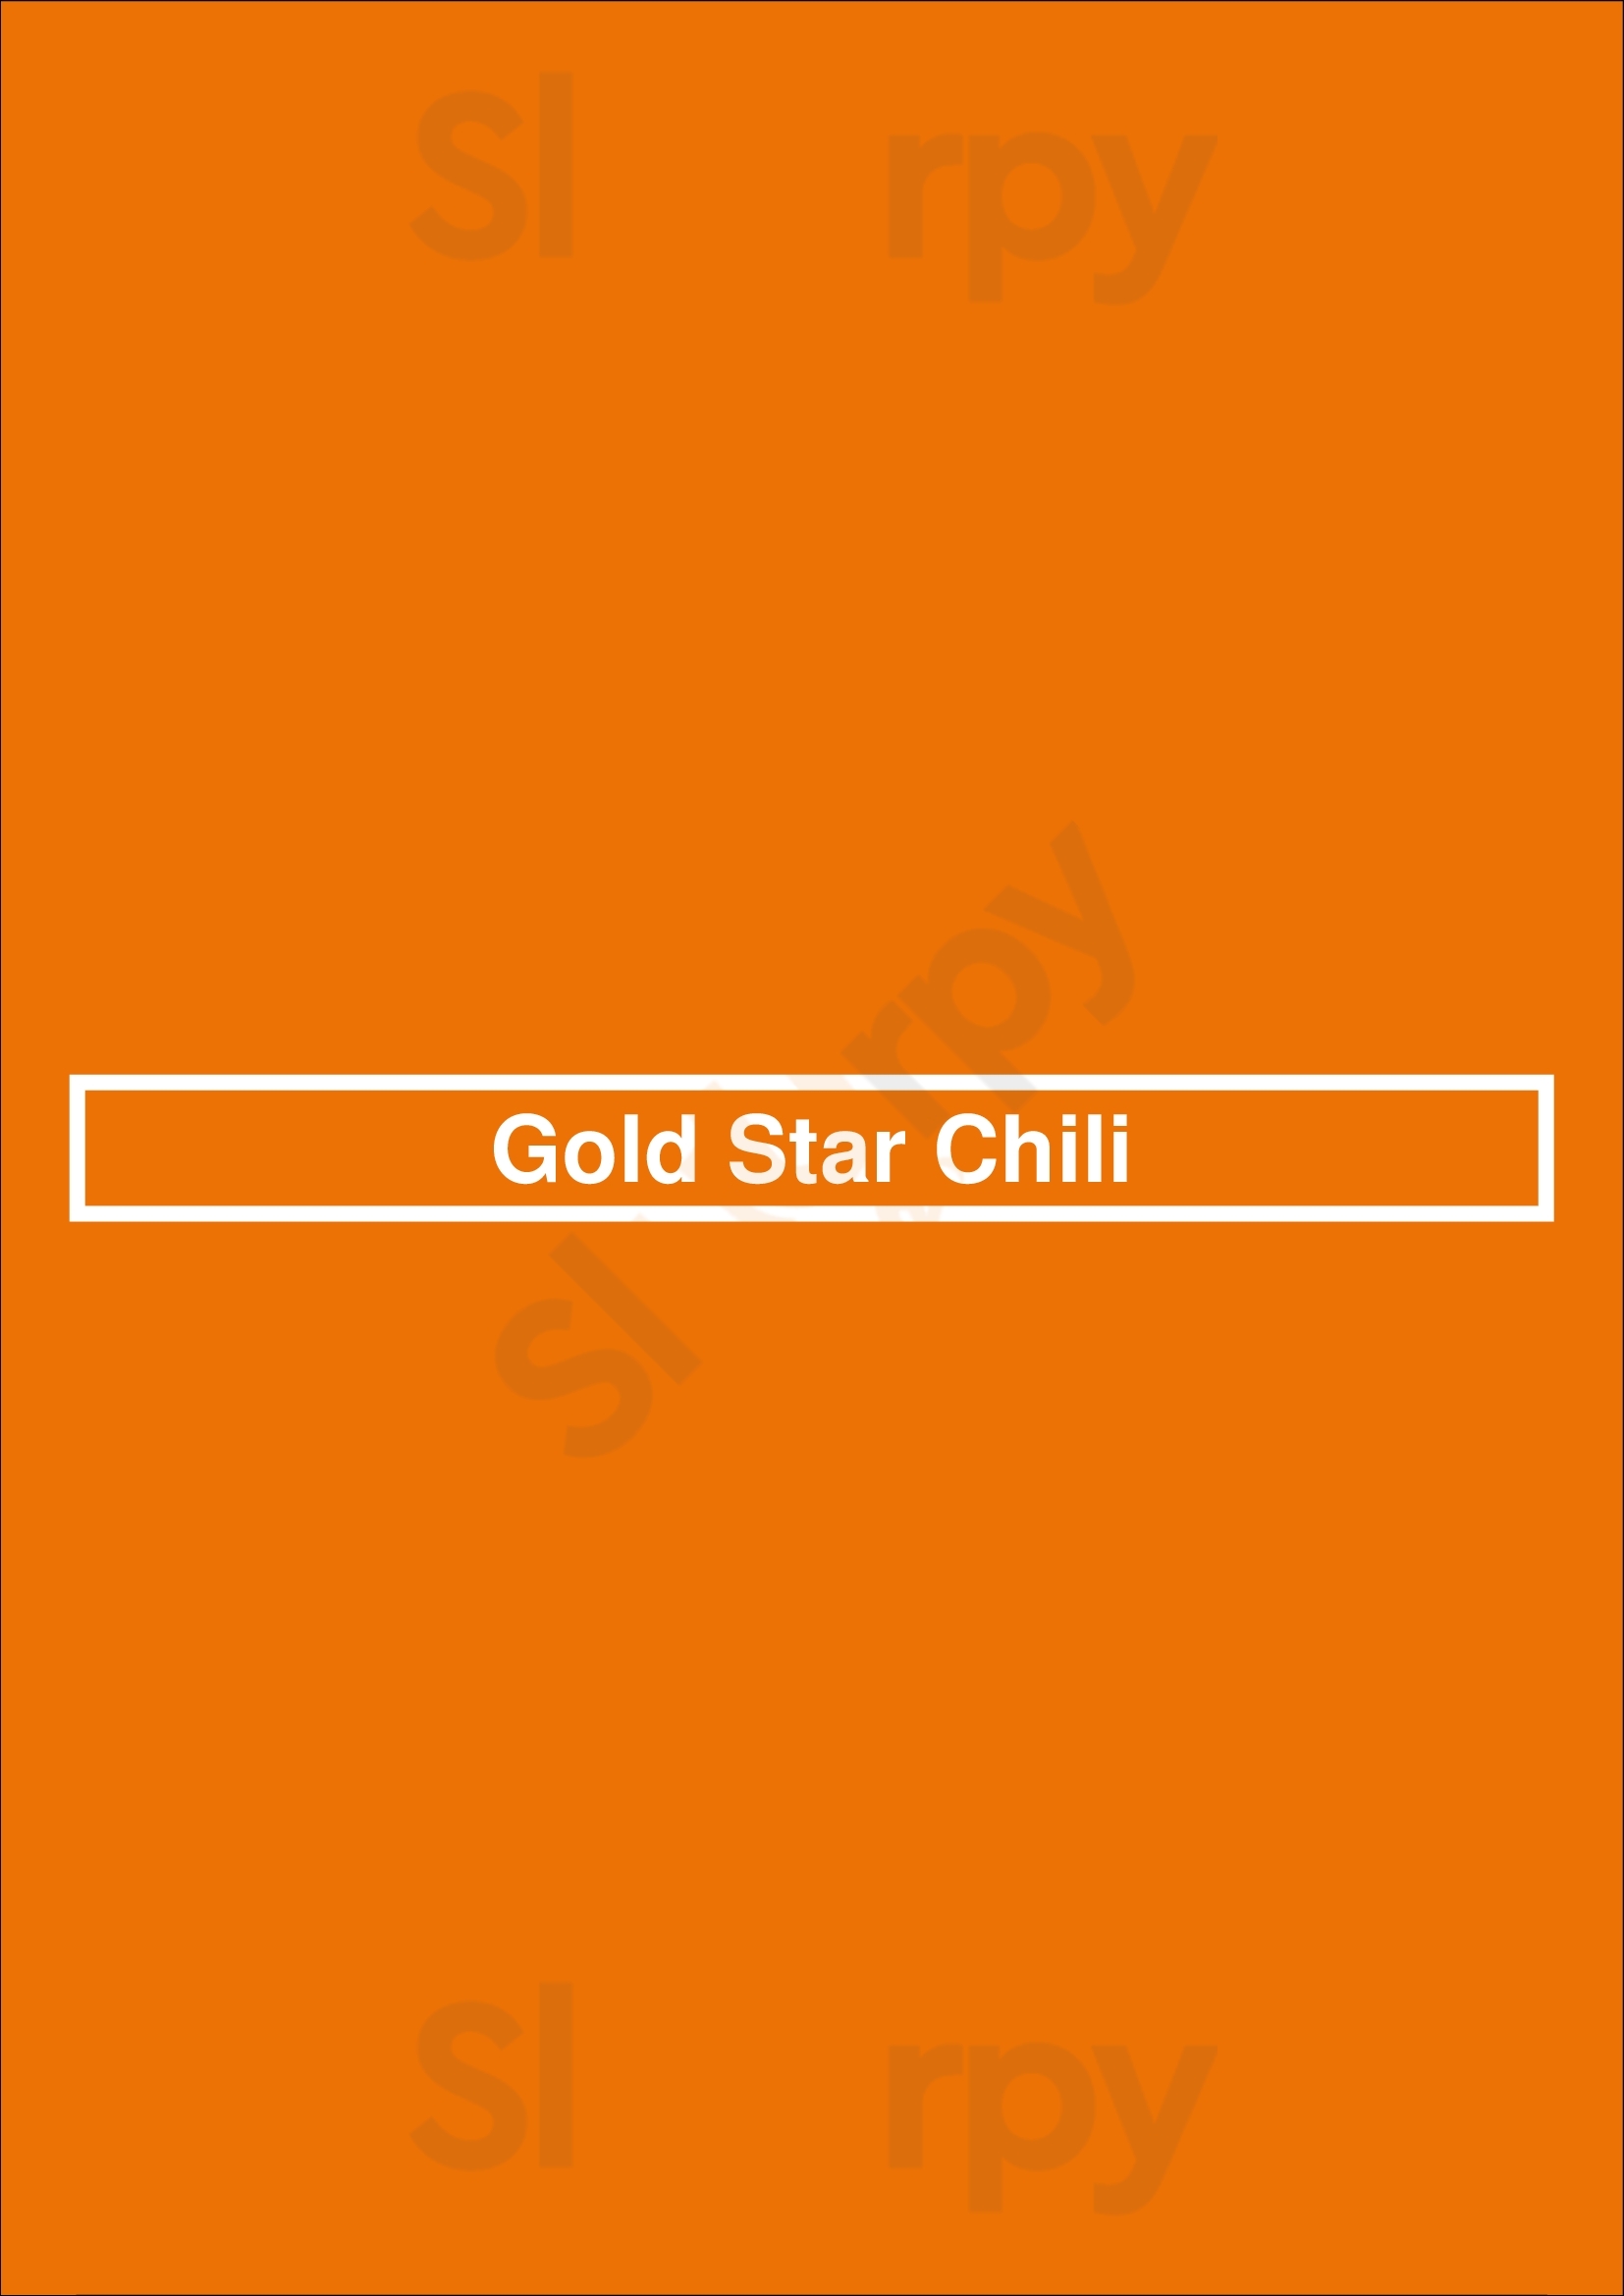 Gold Star Cincinnati Menu - 1